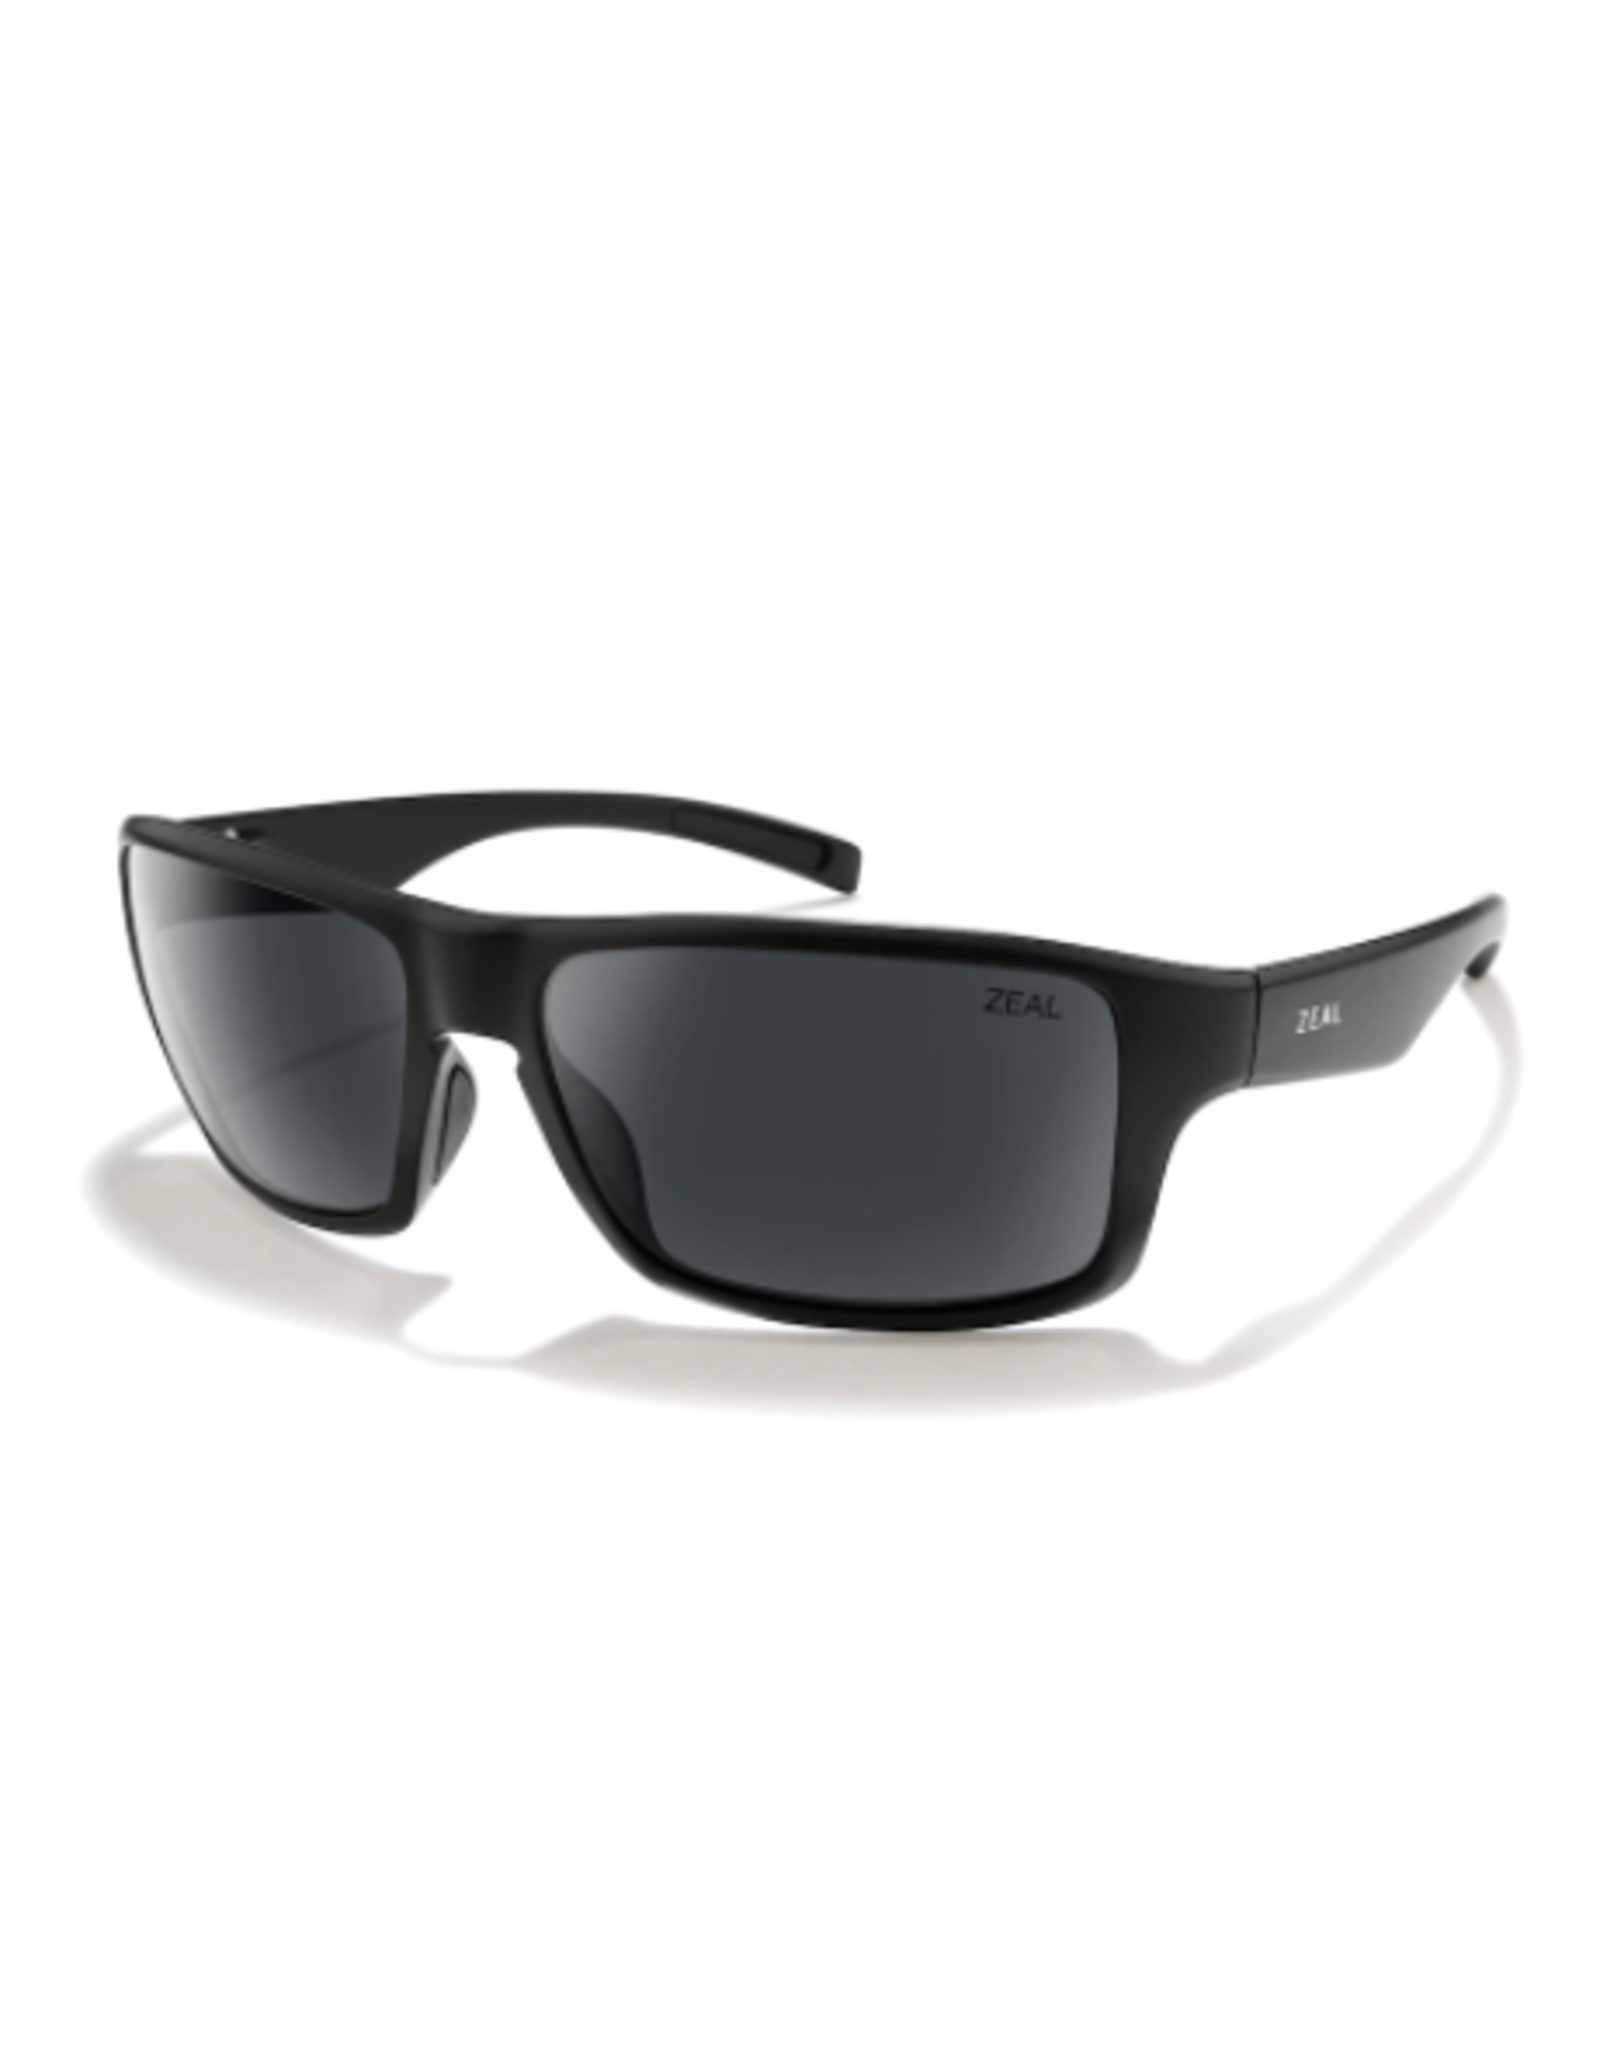 Zeal Incline Matte Black Sunglasses with Dark Grey Polarized Lens